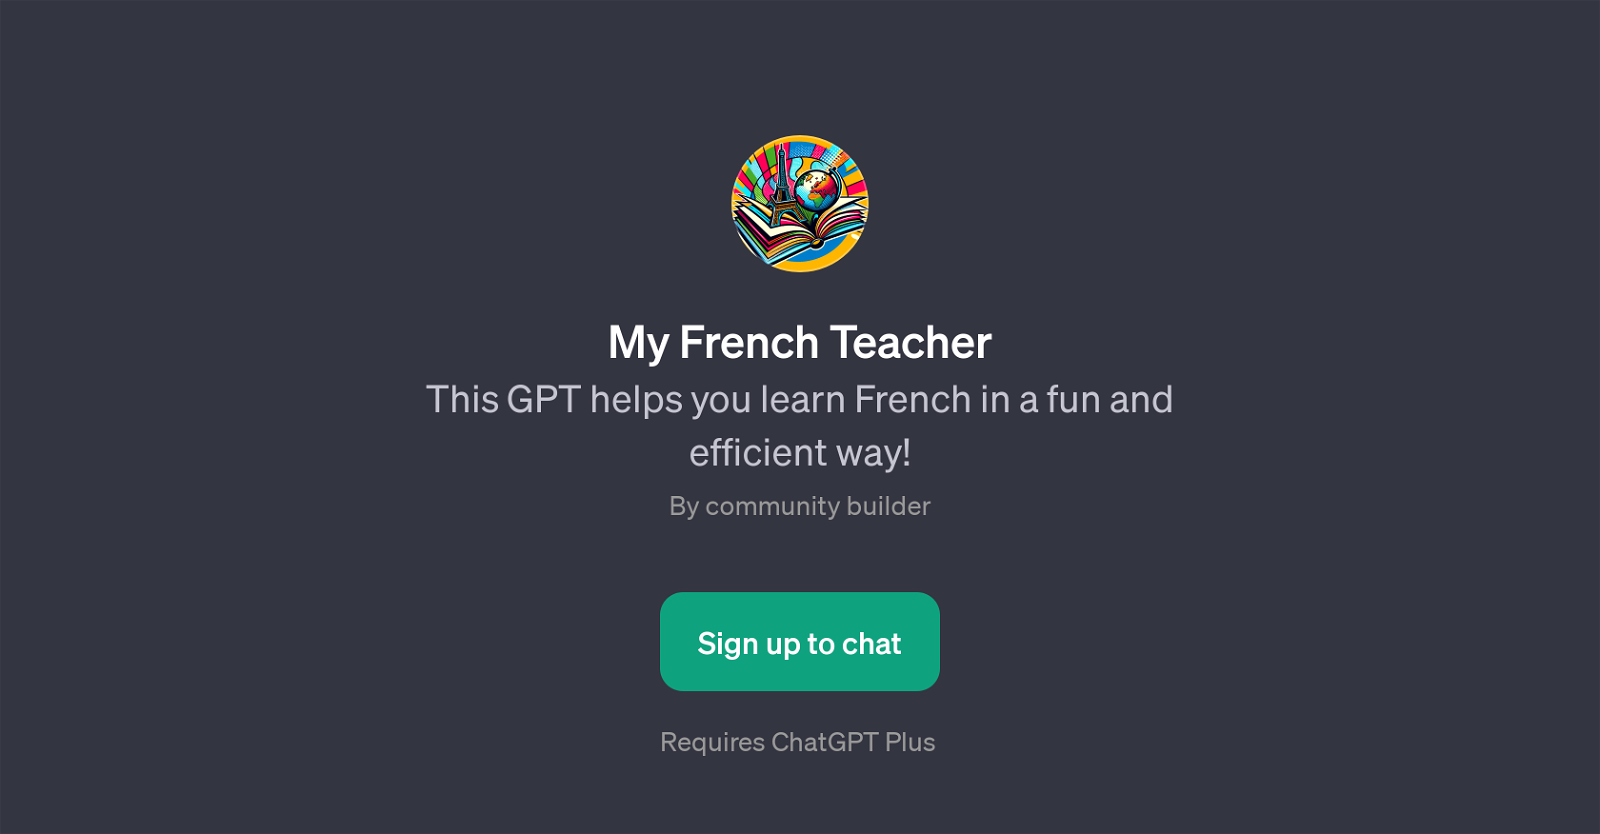 My French Teacher website